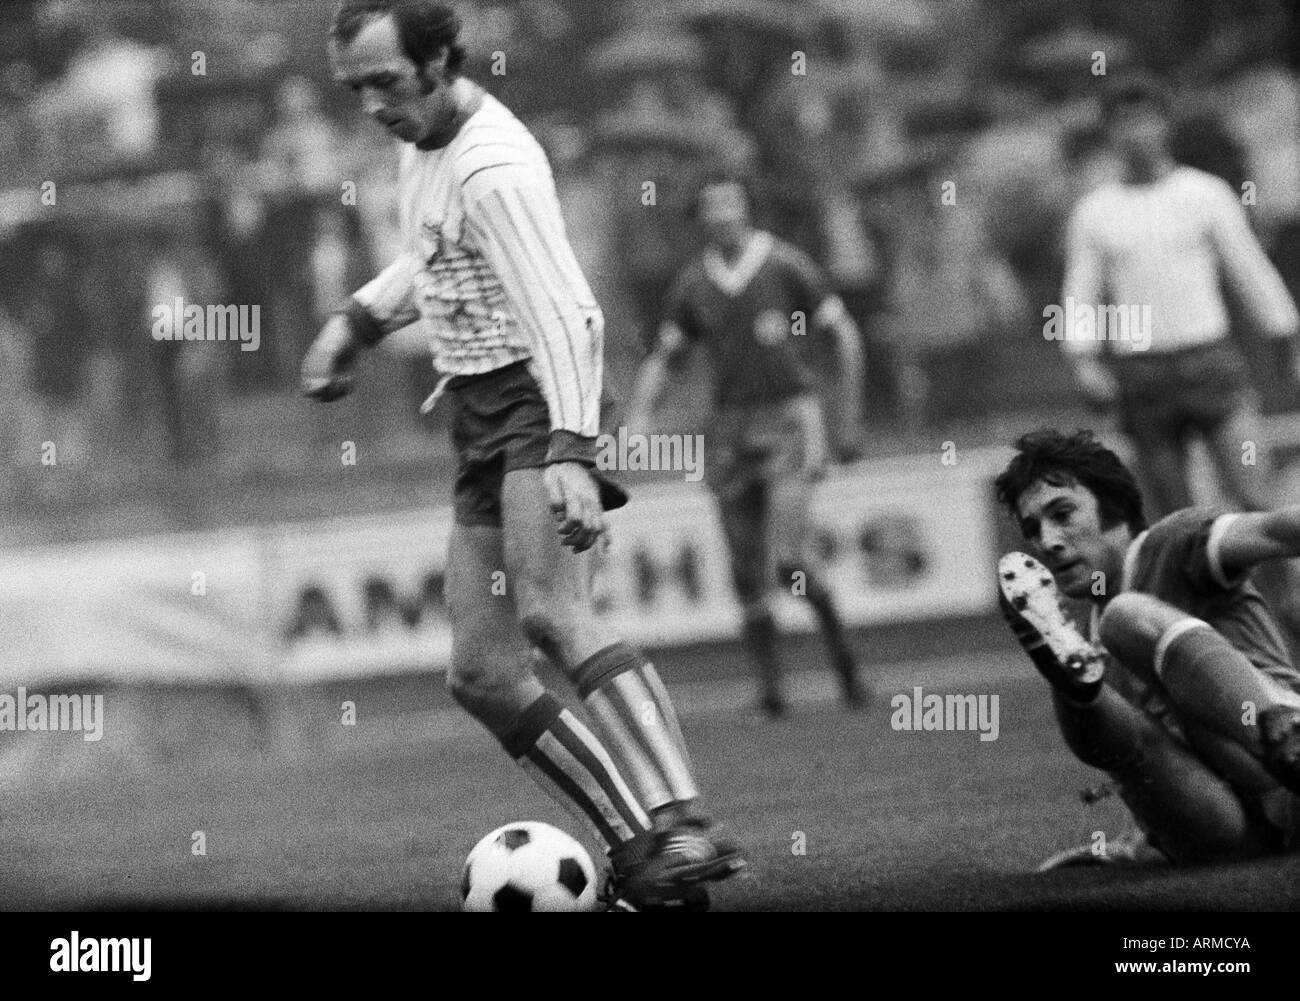 Calcio, Regionalliga Ovest, 1973/1974, Niederrhein Stadium di Oberhausen, Rot-Weiss Oberhausen versus Sportfreunde Siegen 3:1, scena del match, Manfred Richter (Siegen) a sinistra e a un lettore di Oberhausen Foto Stock